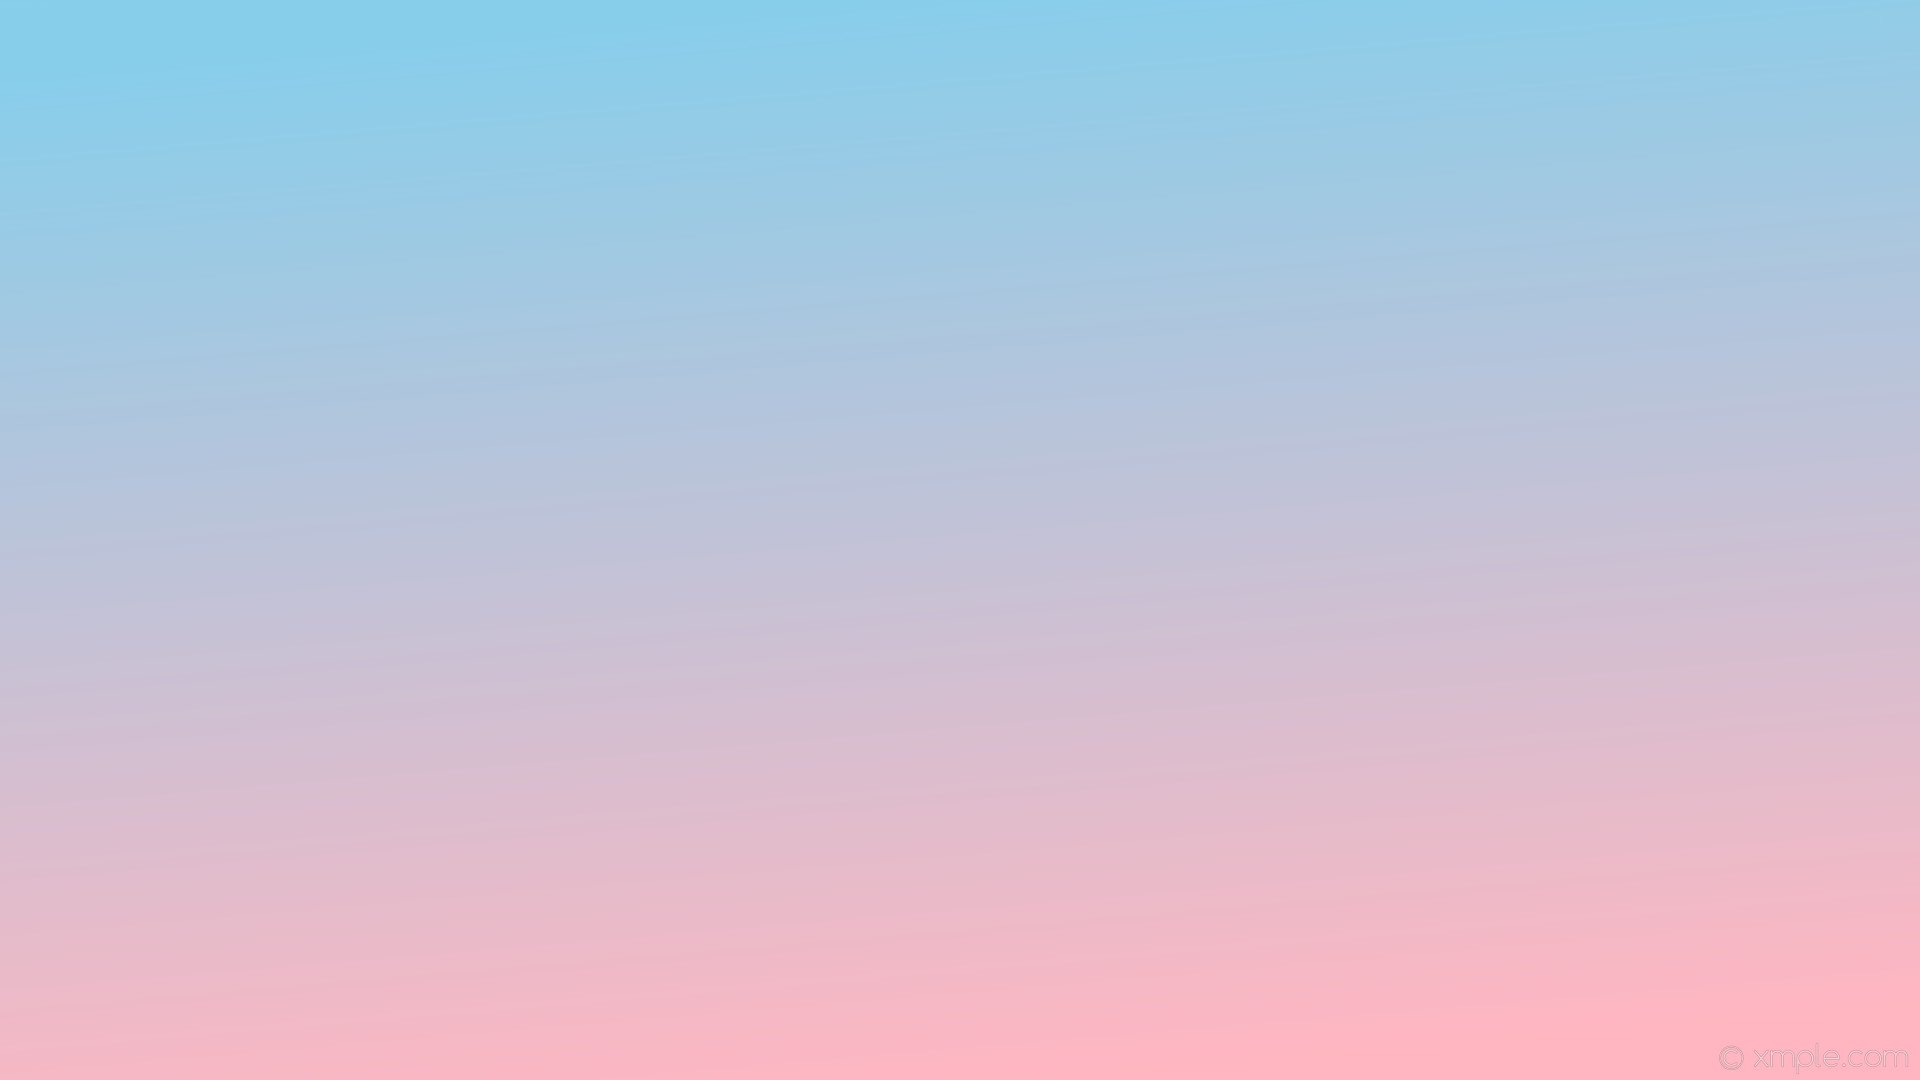 wallpaper blue gradient pink linear light pink sky blue #ffb6c1 ceeb 285Â°